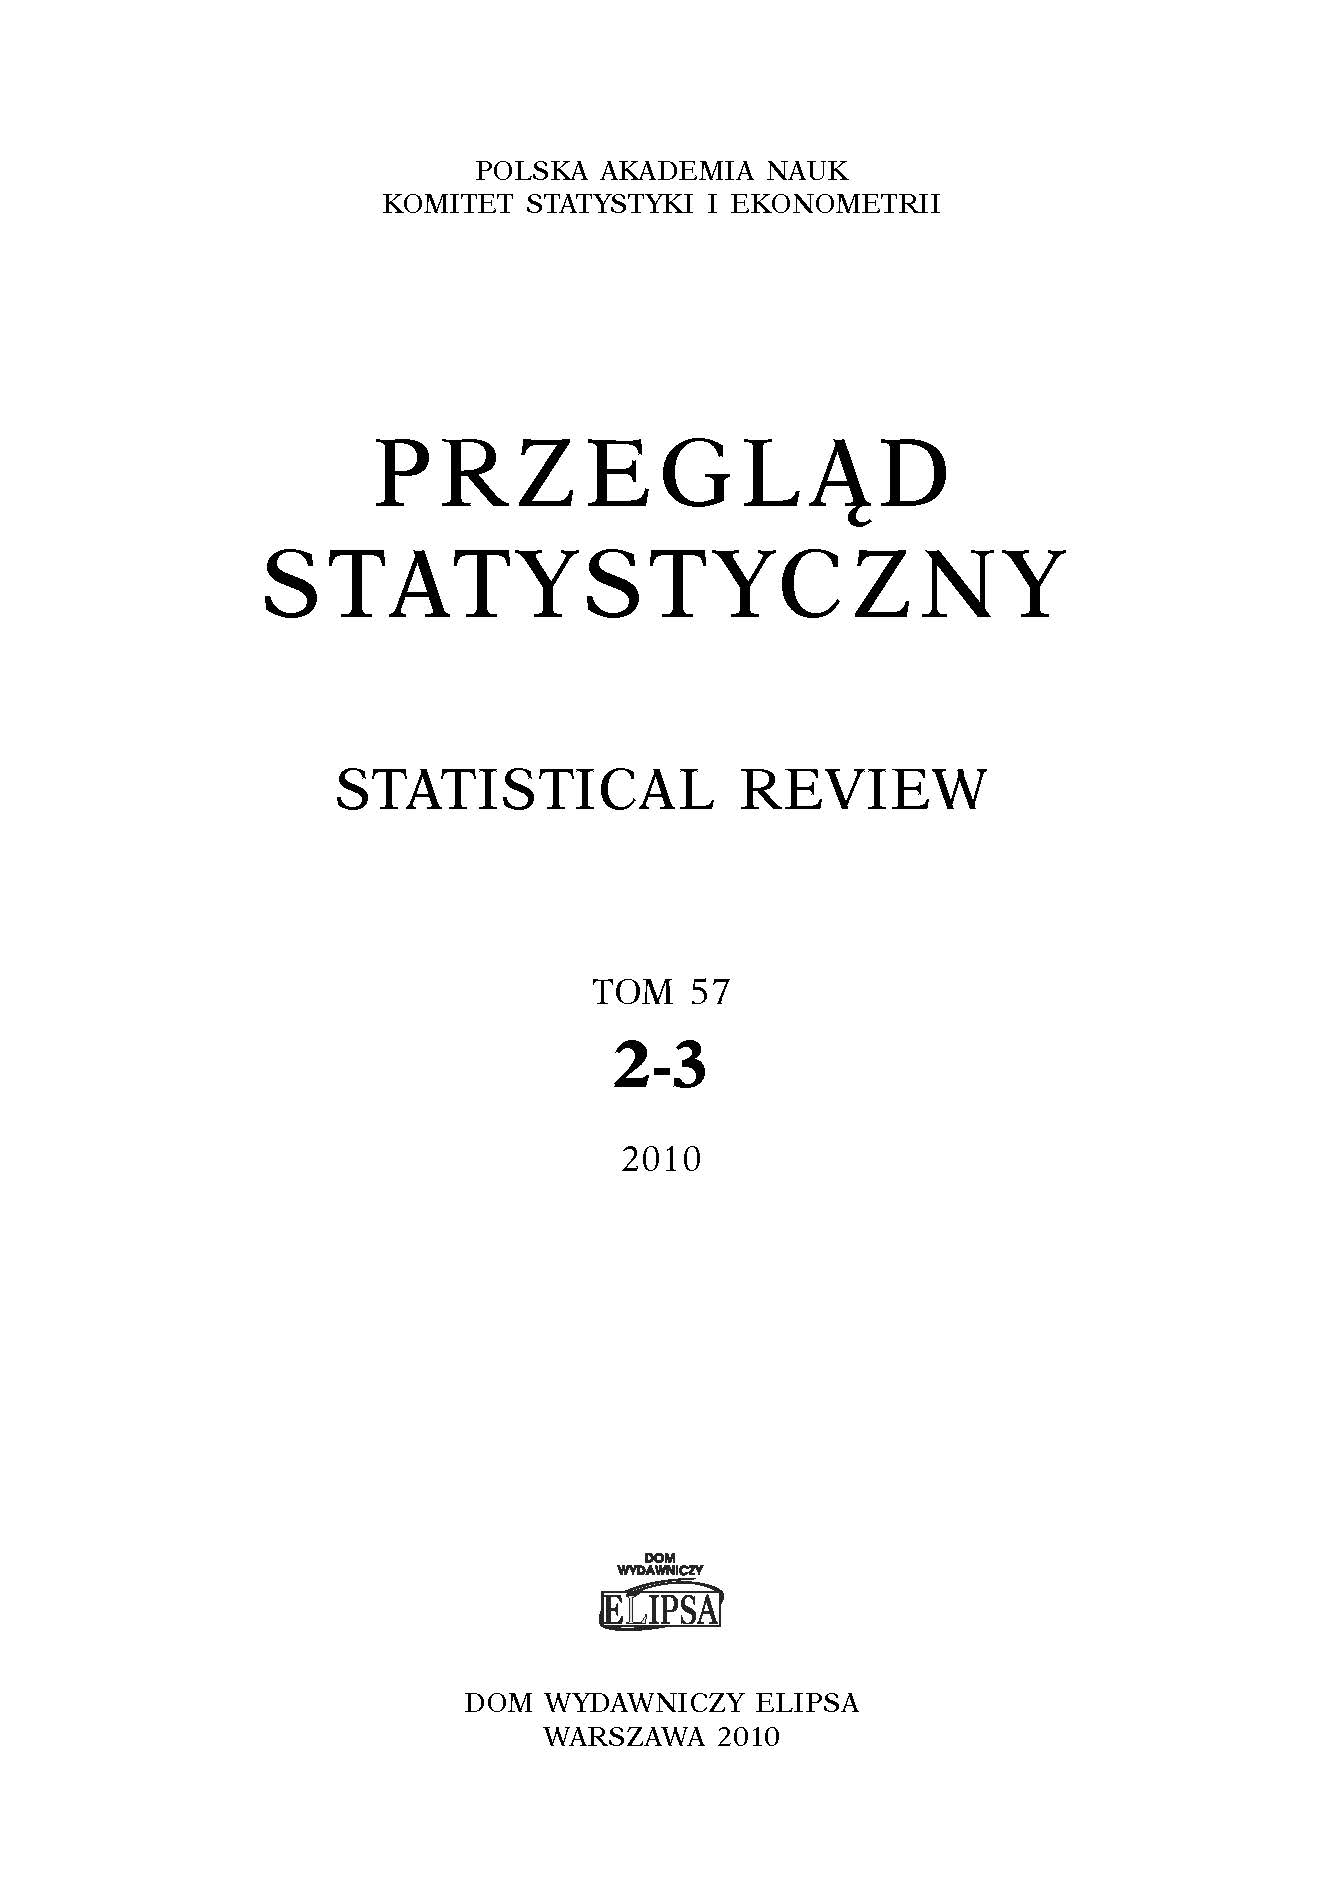 The life and work of Professor Zbigniew Czerwiński (1927-2010) Cover Image